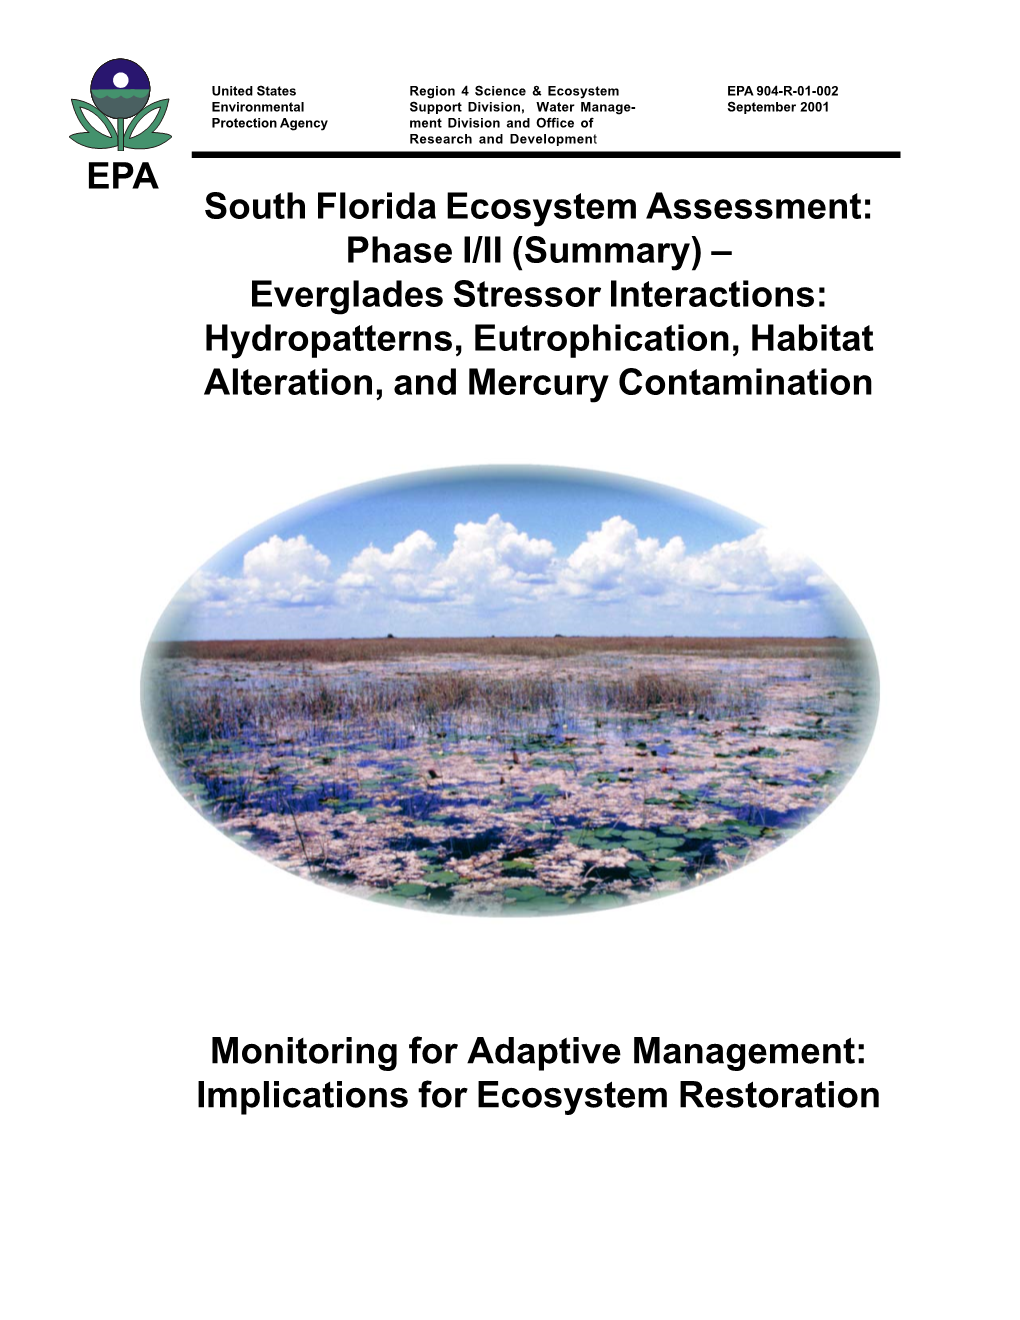 South Florida Ecosystem Assessment